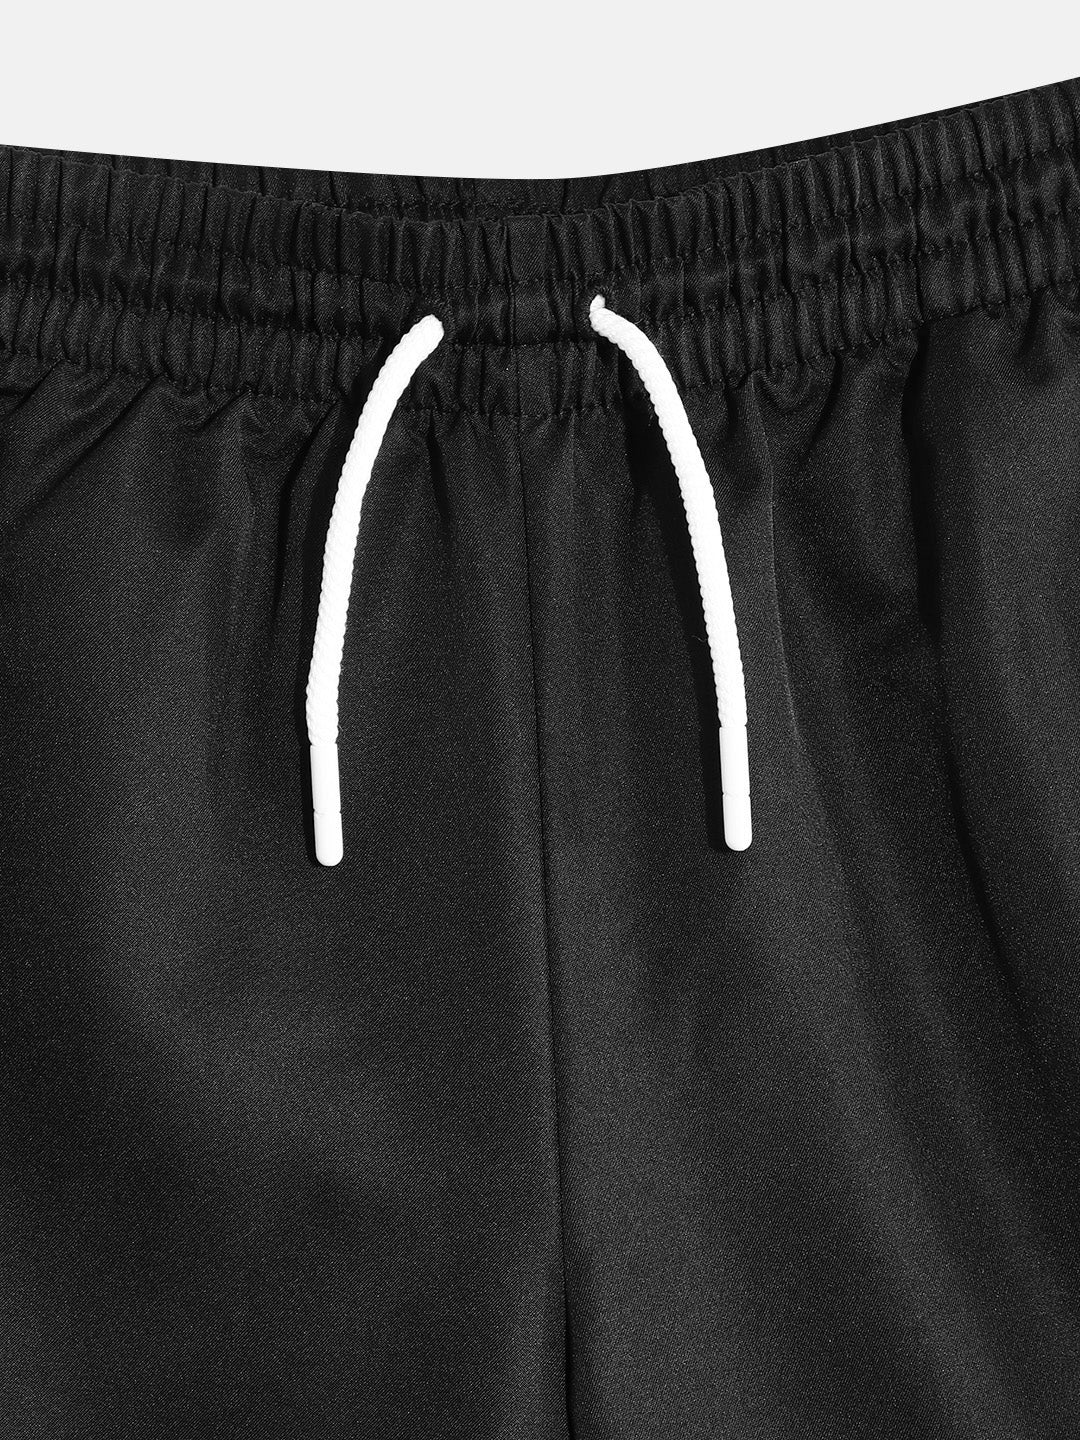 jordan black woven play shorts